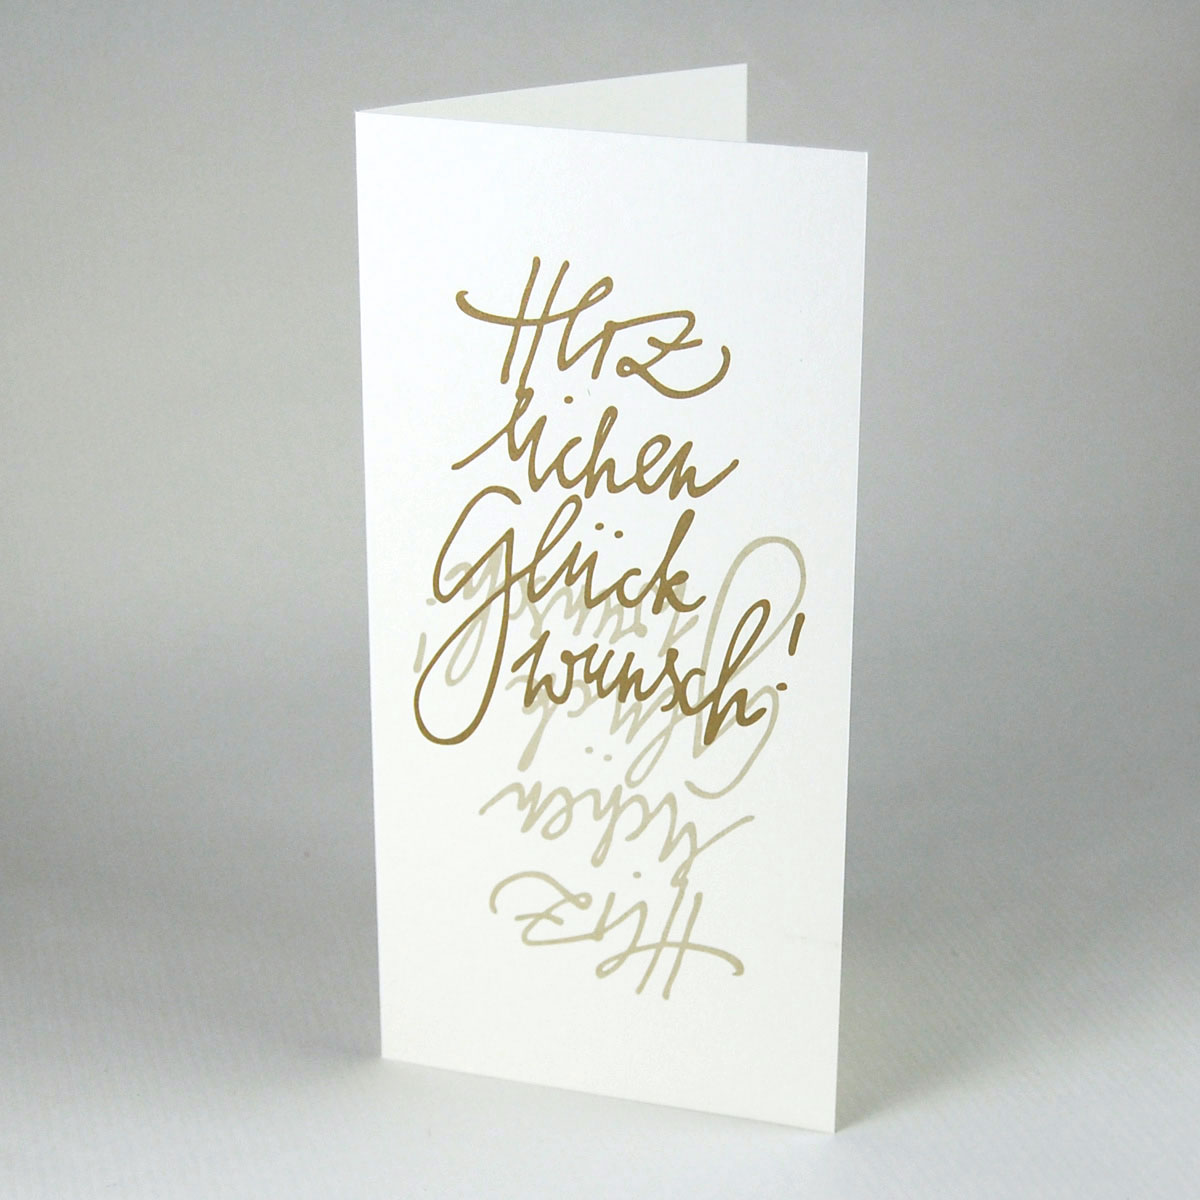 Herzlichen Glückwunsch! handschriftliche Wünsche gold gedruckt auf Recycling-Glückwünschkarten